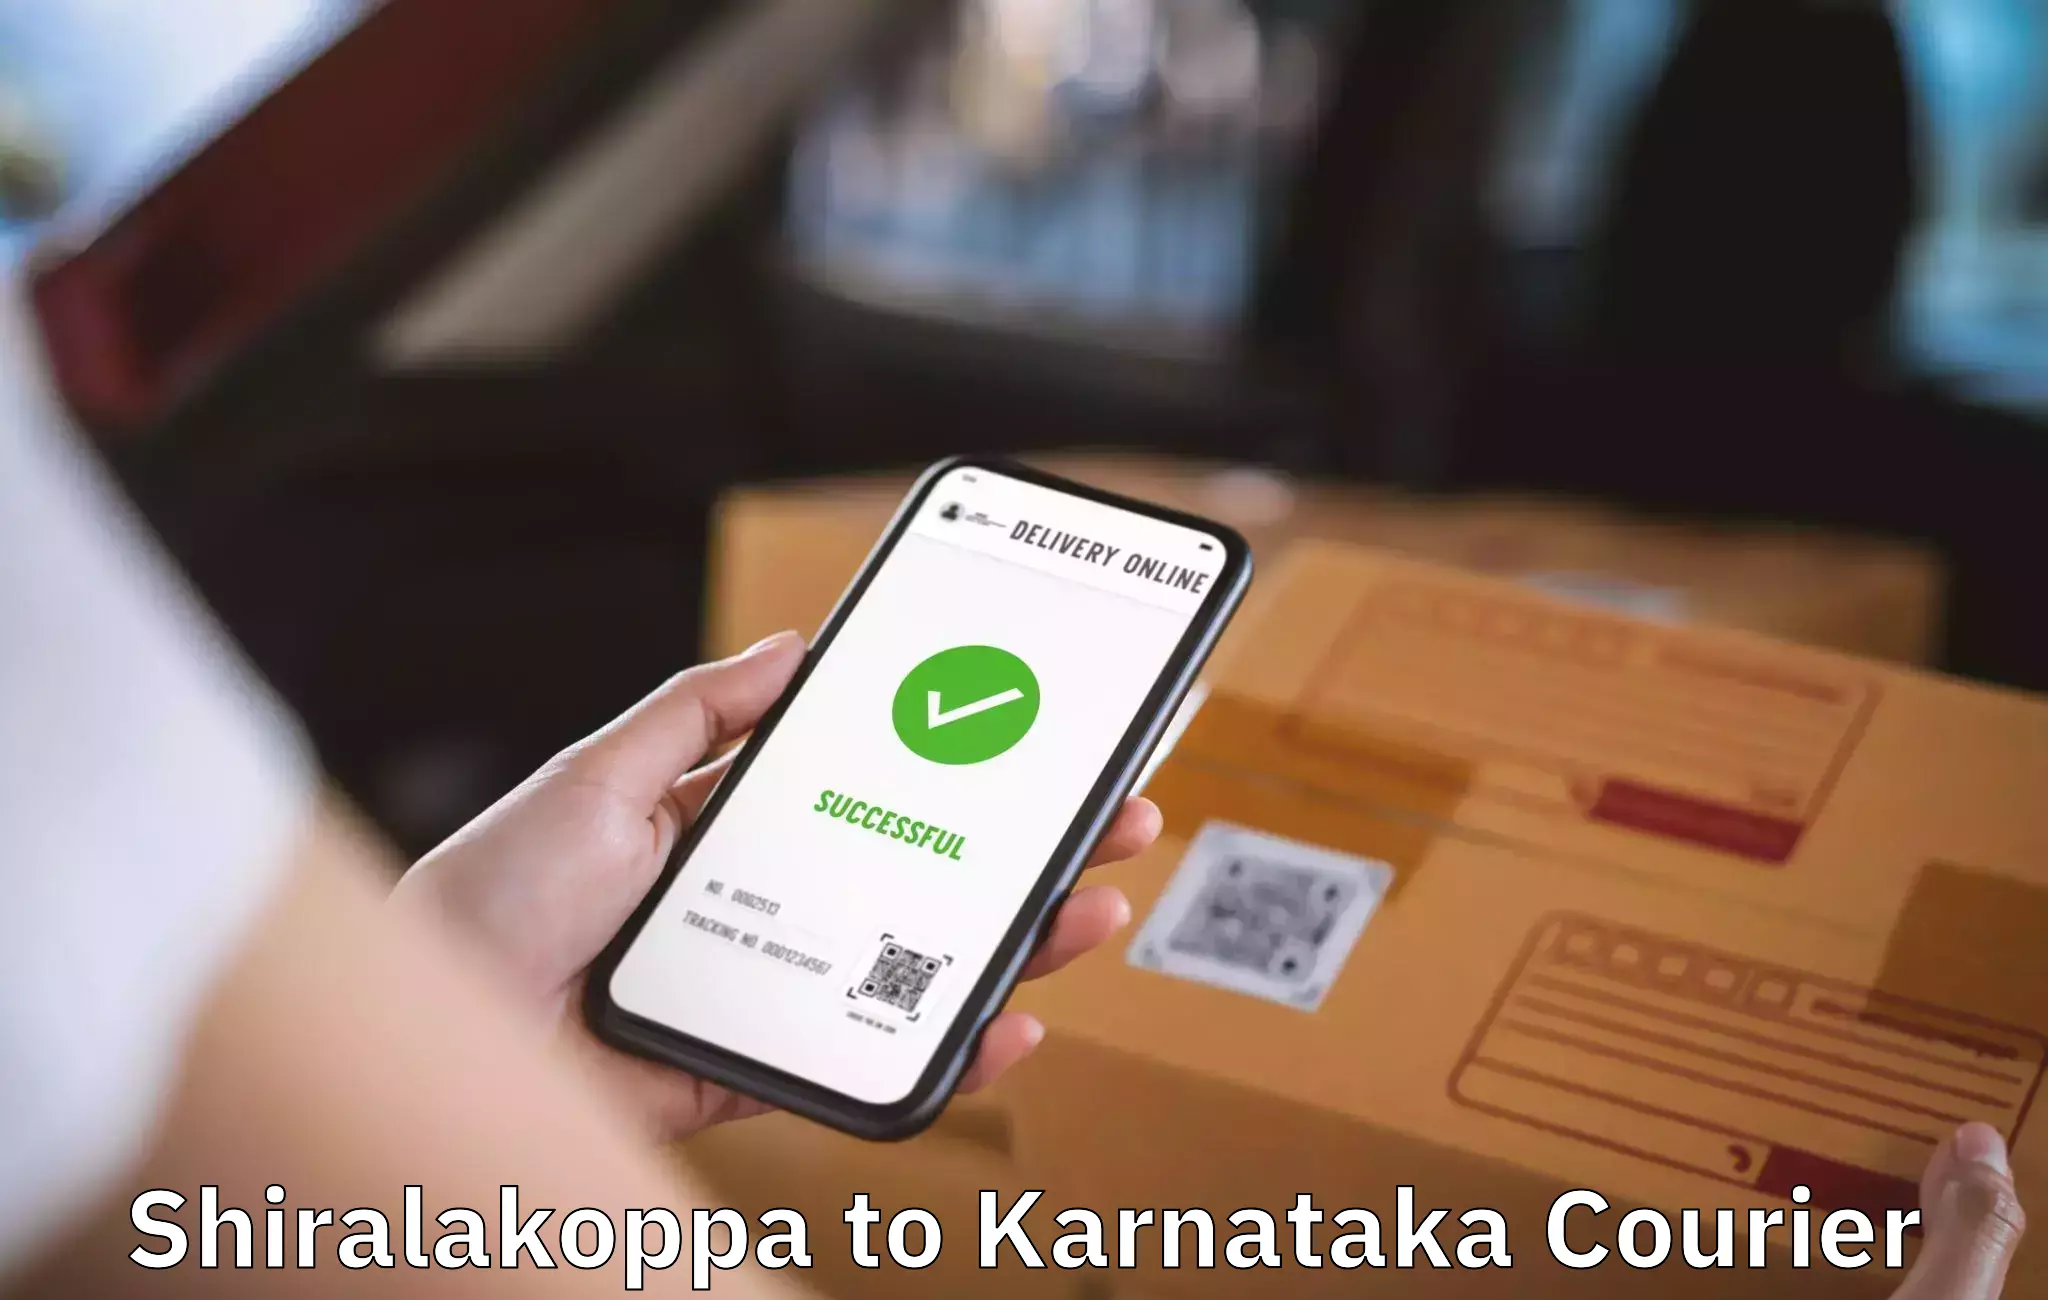 Furniture delivery service Shiralakoppa to Karnataka